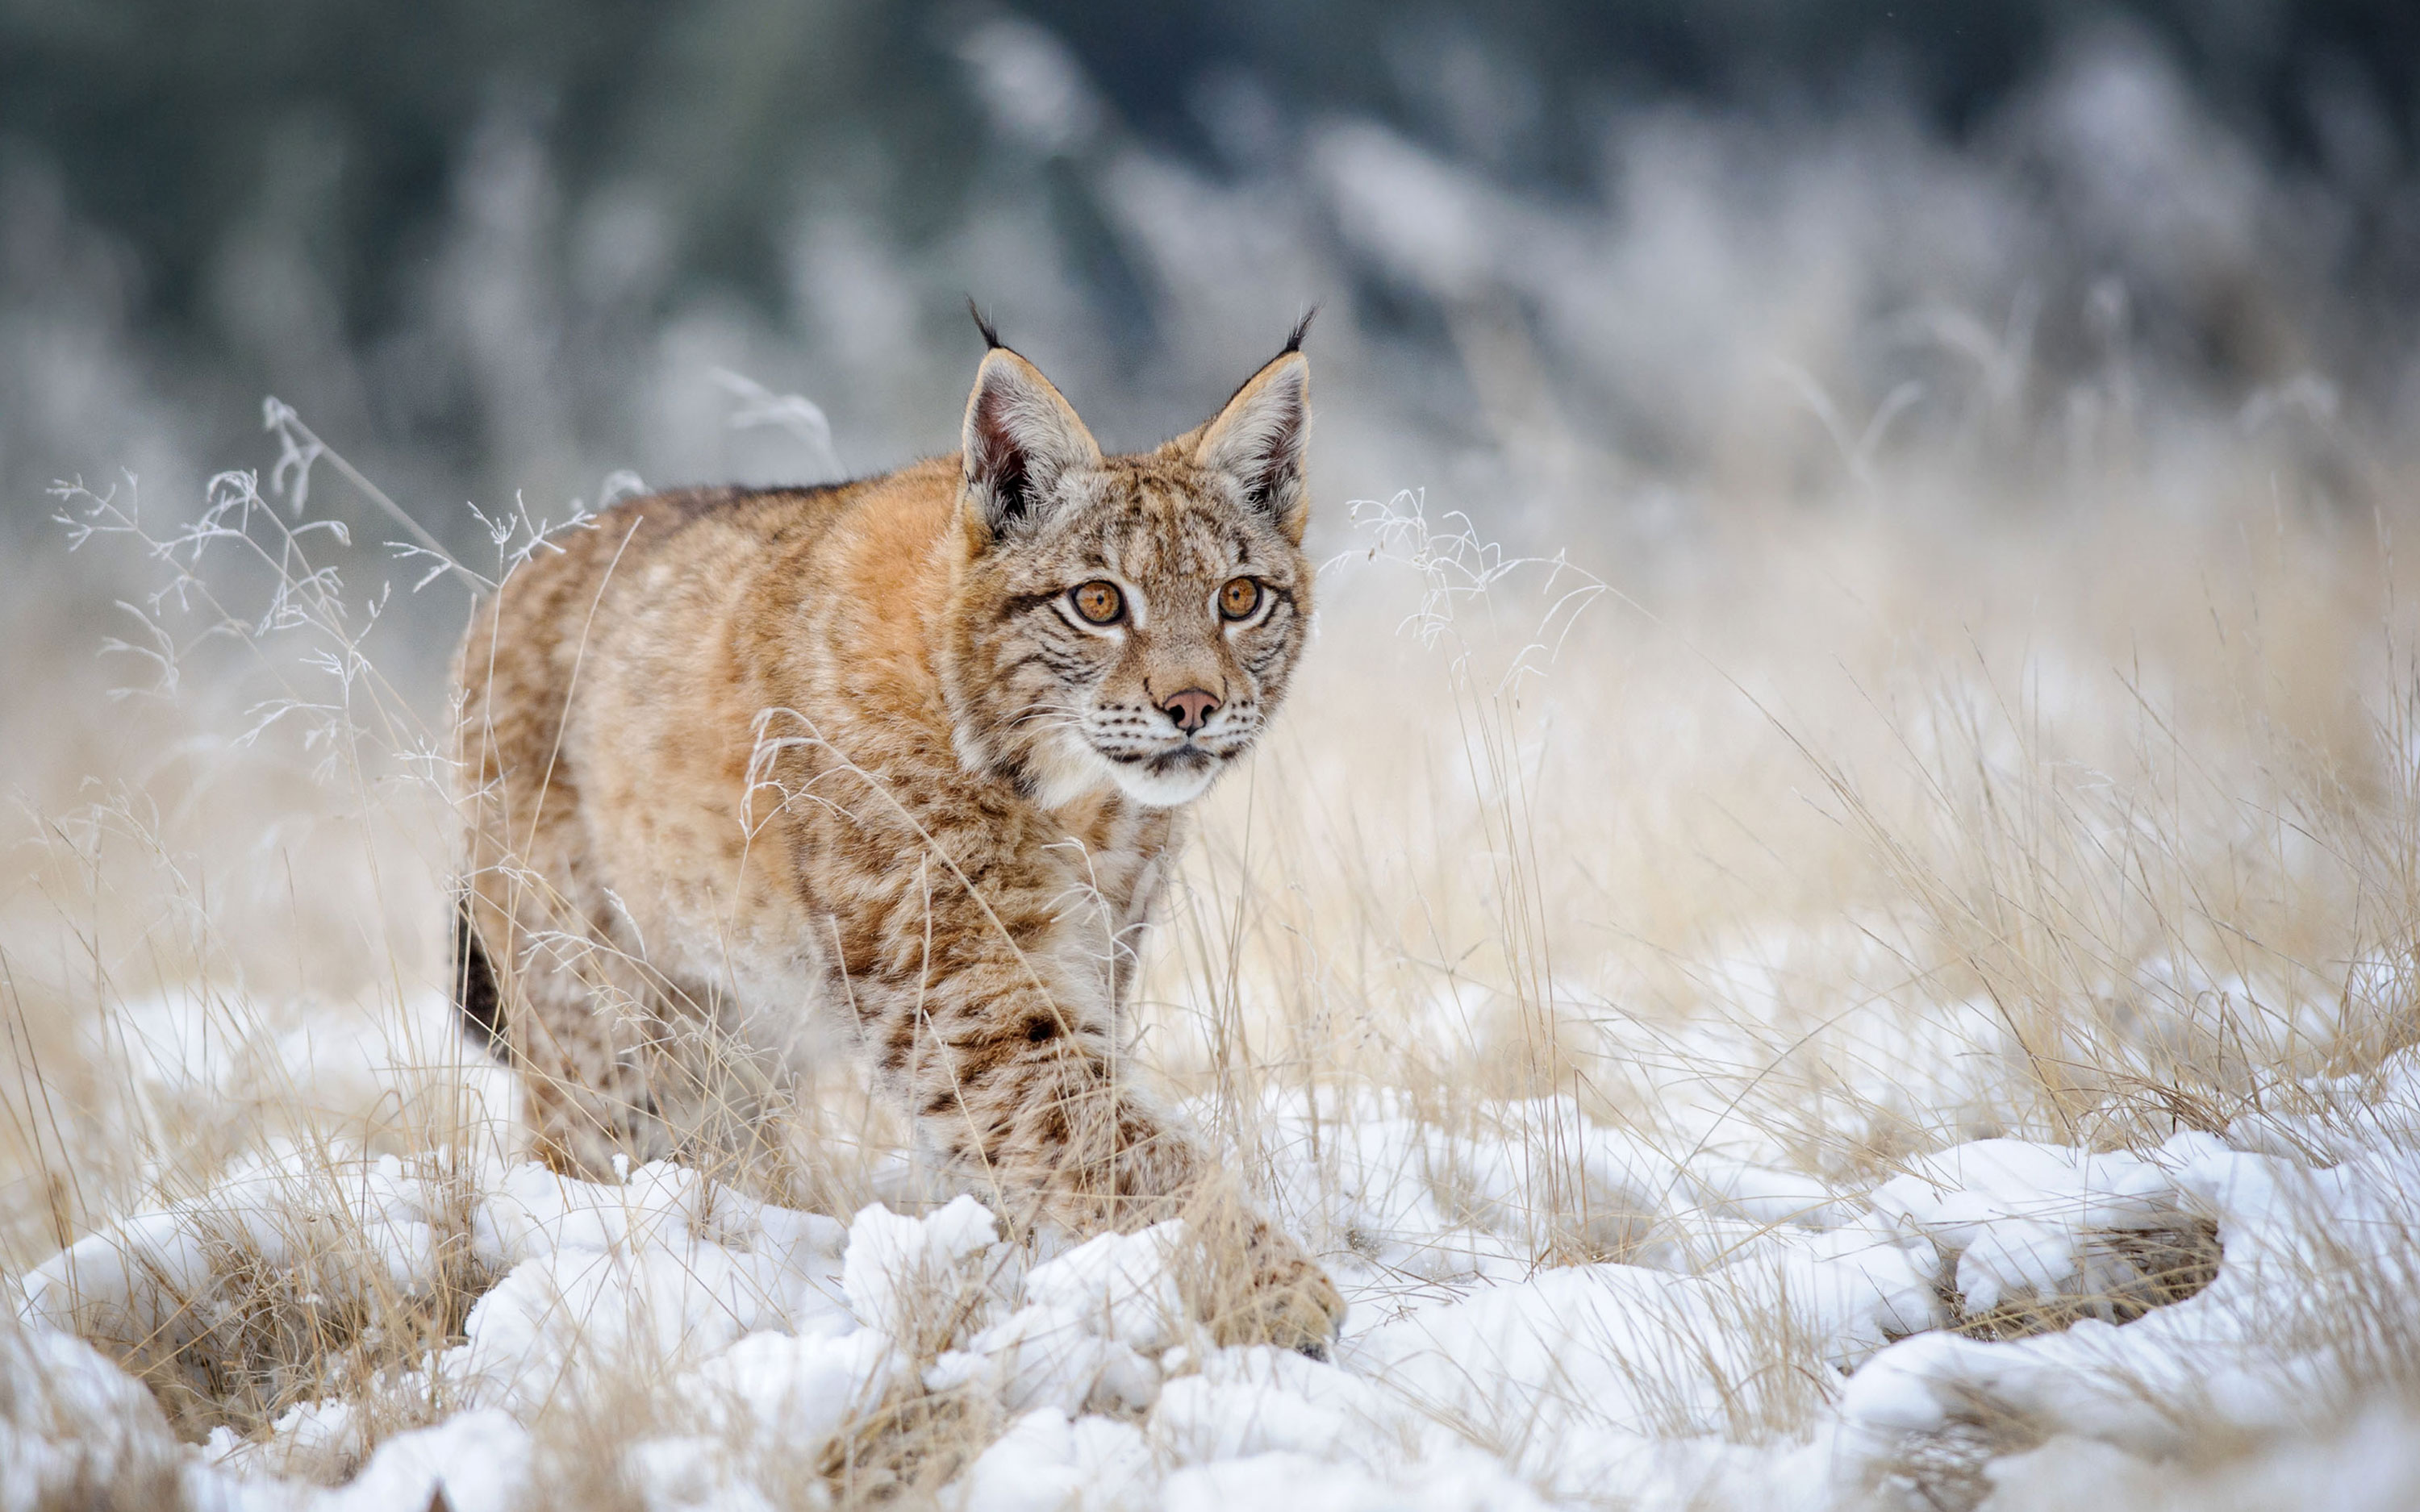 A lynx sneaks in the snow.